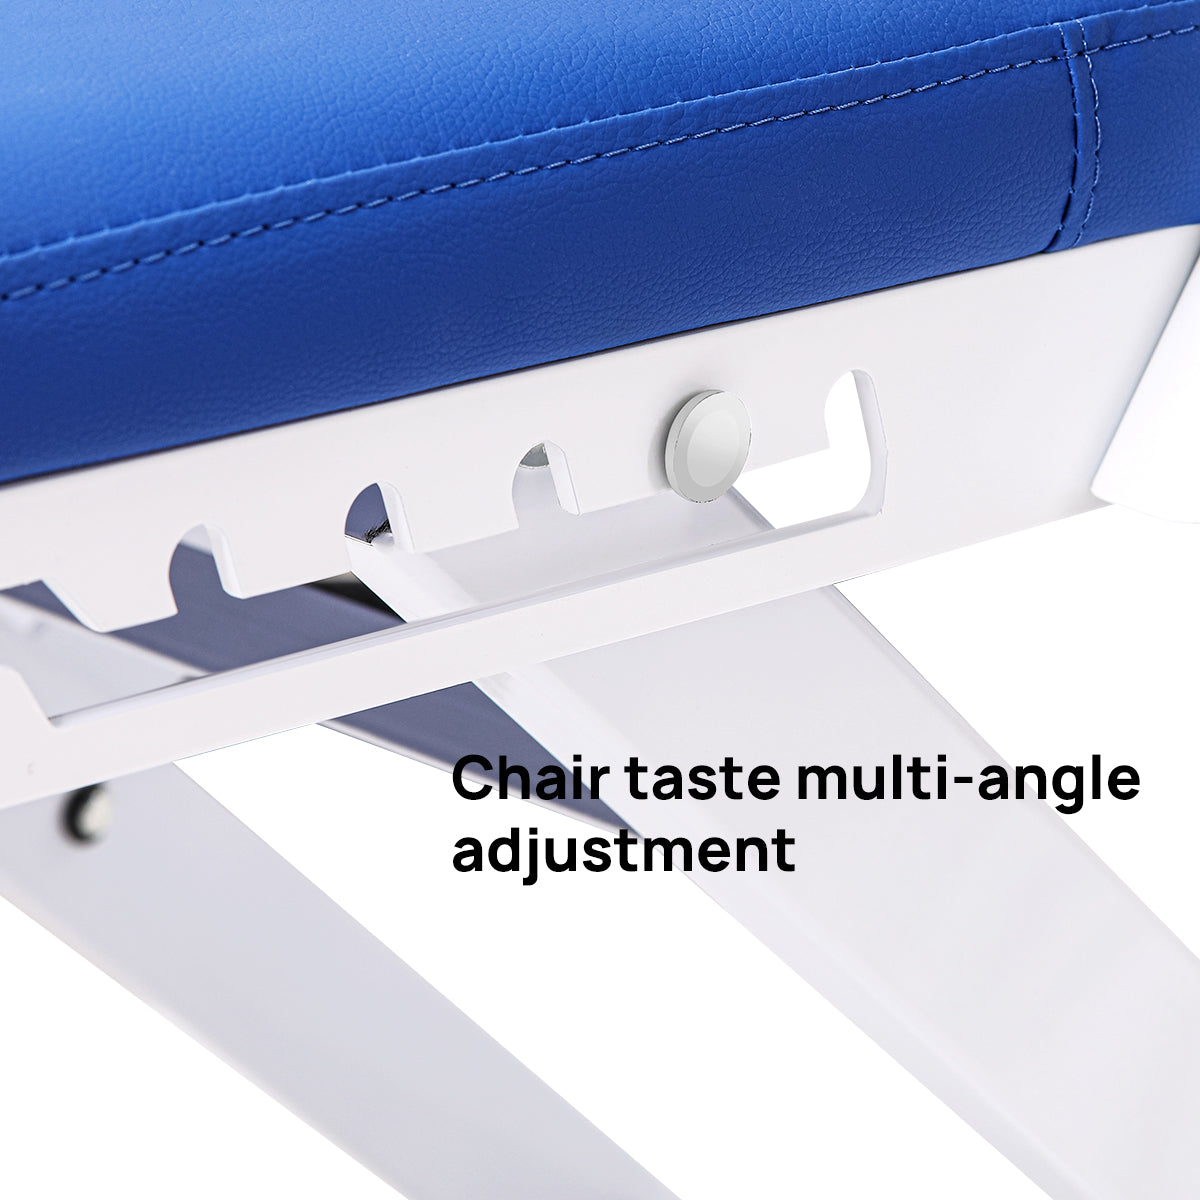 Dental Portable Mobile Folding Chair Rechargeable LED Light with Turbine Blue 4 Holes - azdentall.com